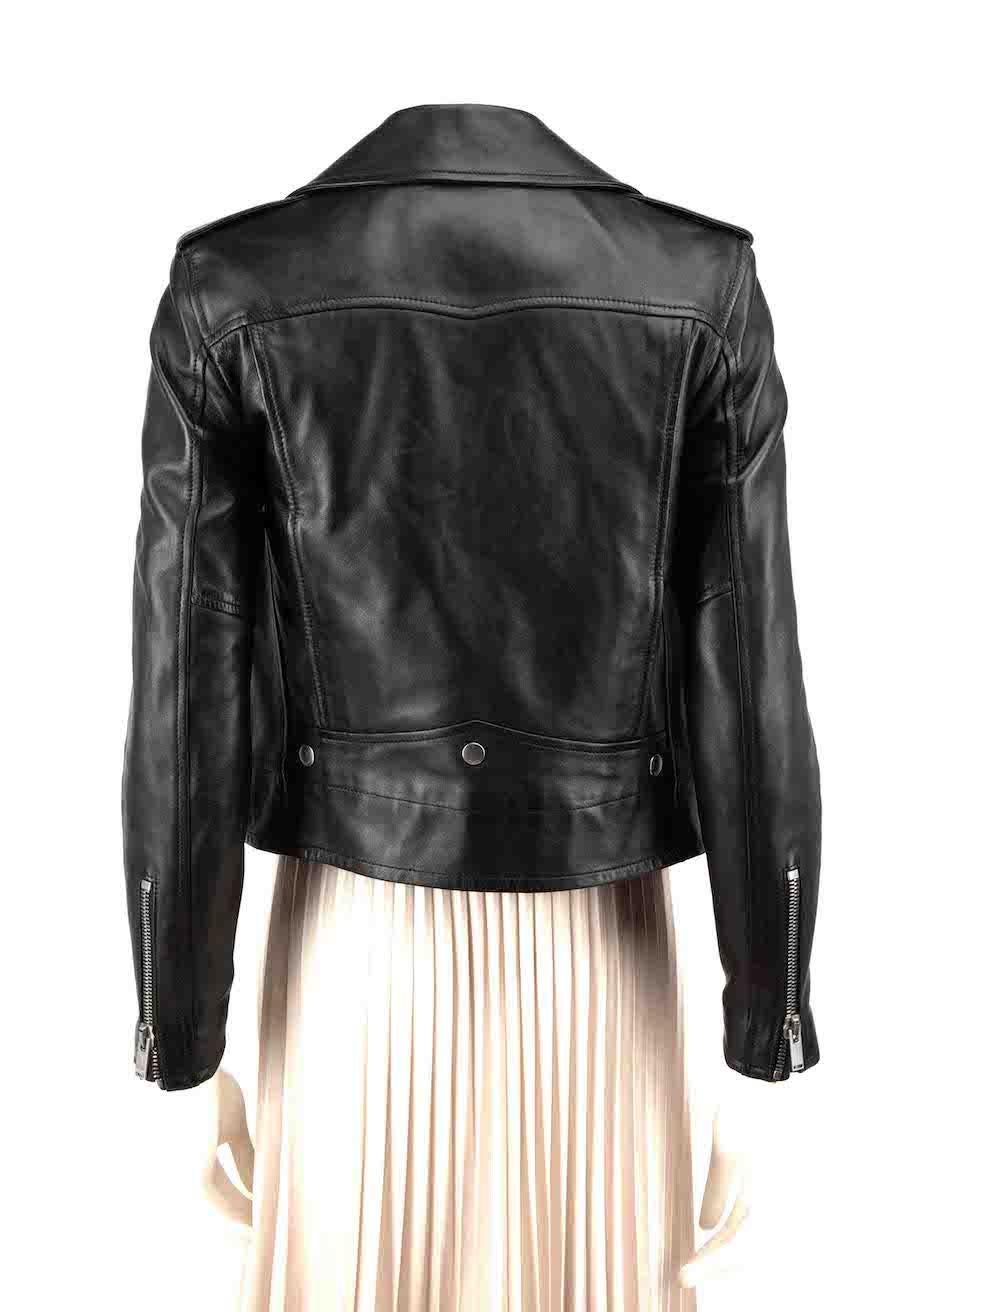 Saint Laurent Black Leather Zip Detail Biker Jacket Size M In Excellent Condition For Sale In London, GB